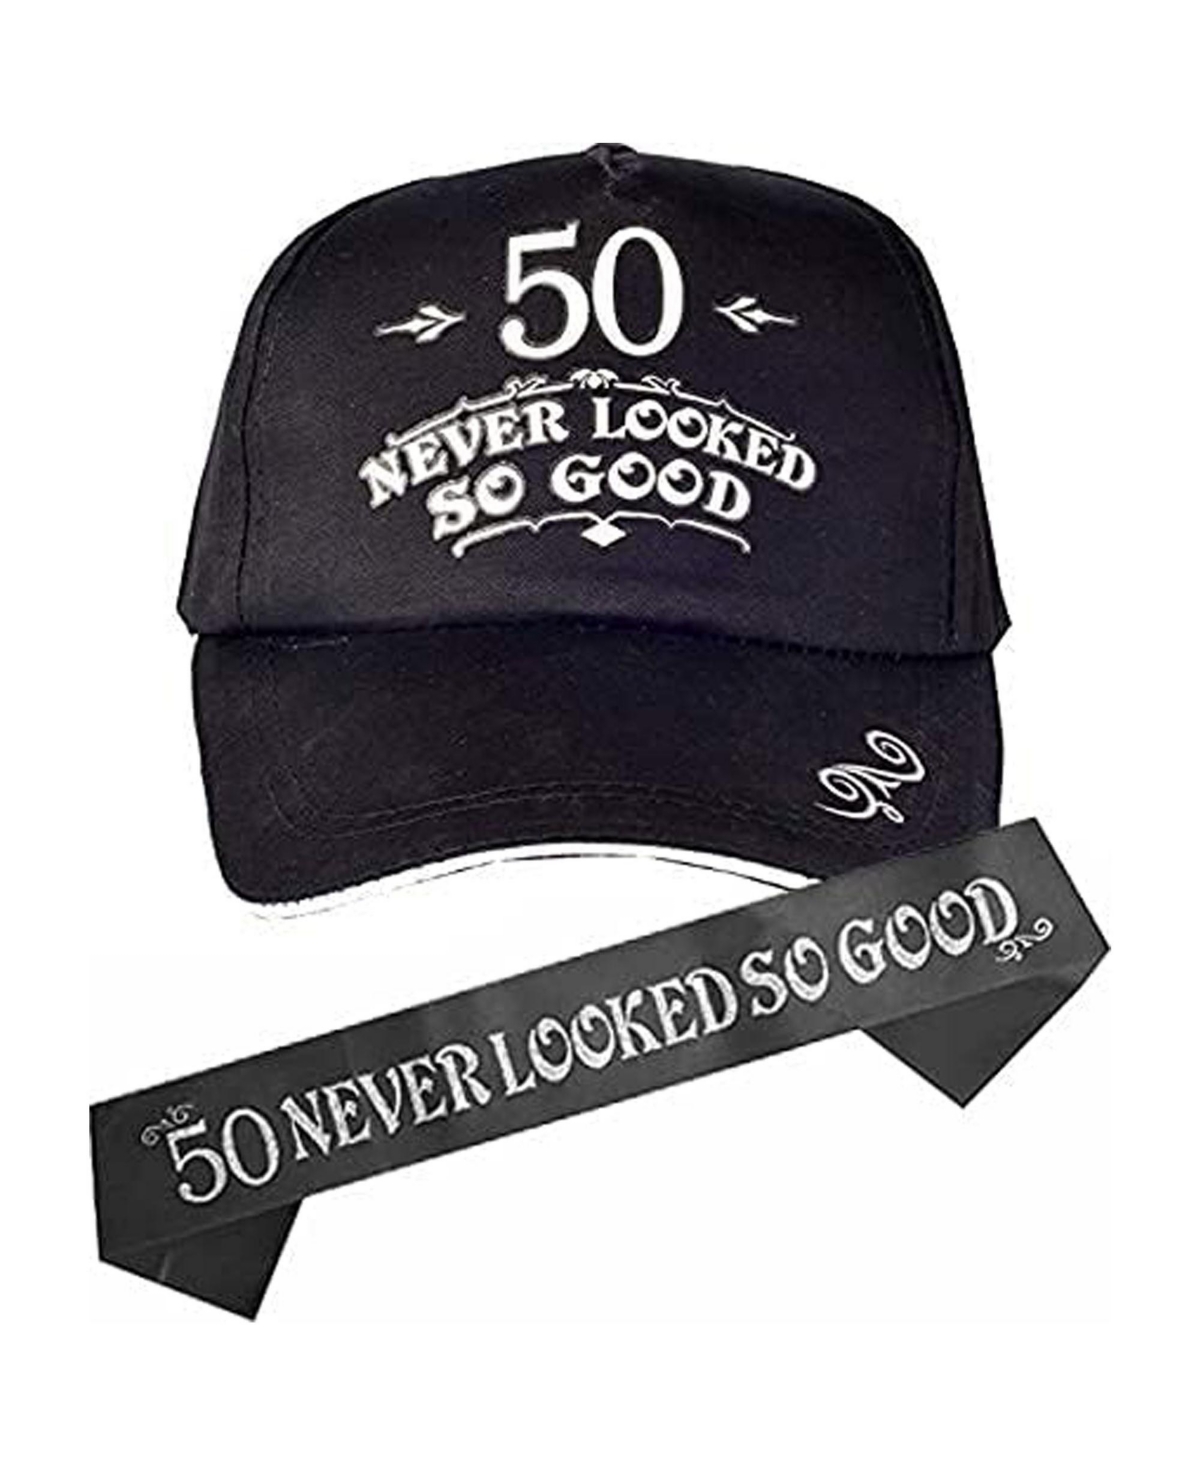 50th Birthday Gifts for Men: Stylish Baseball Cap and Sash Set, "50 Never Looked So Good" Design, Perfect for Celebrating Milestone Birthda